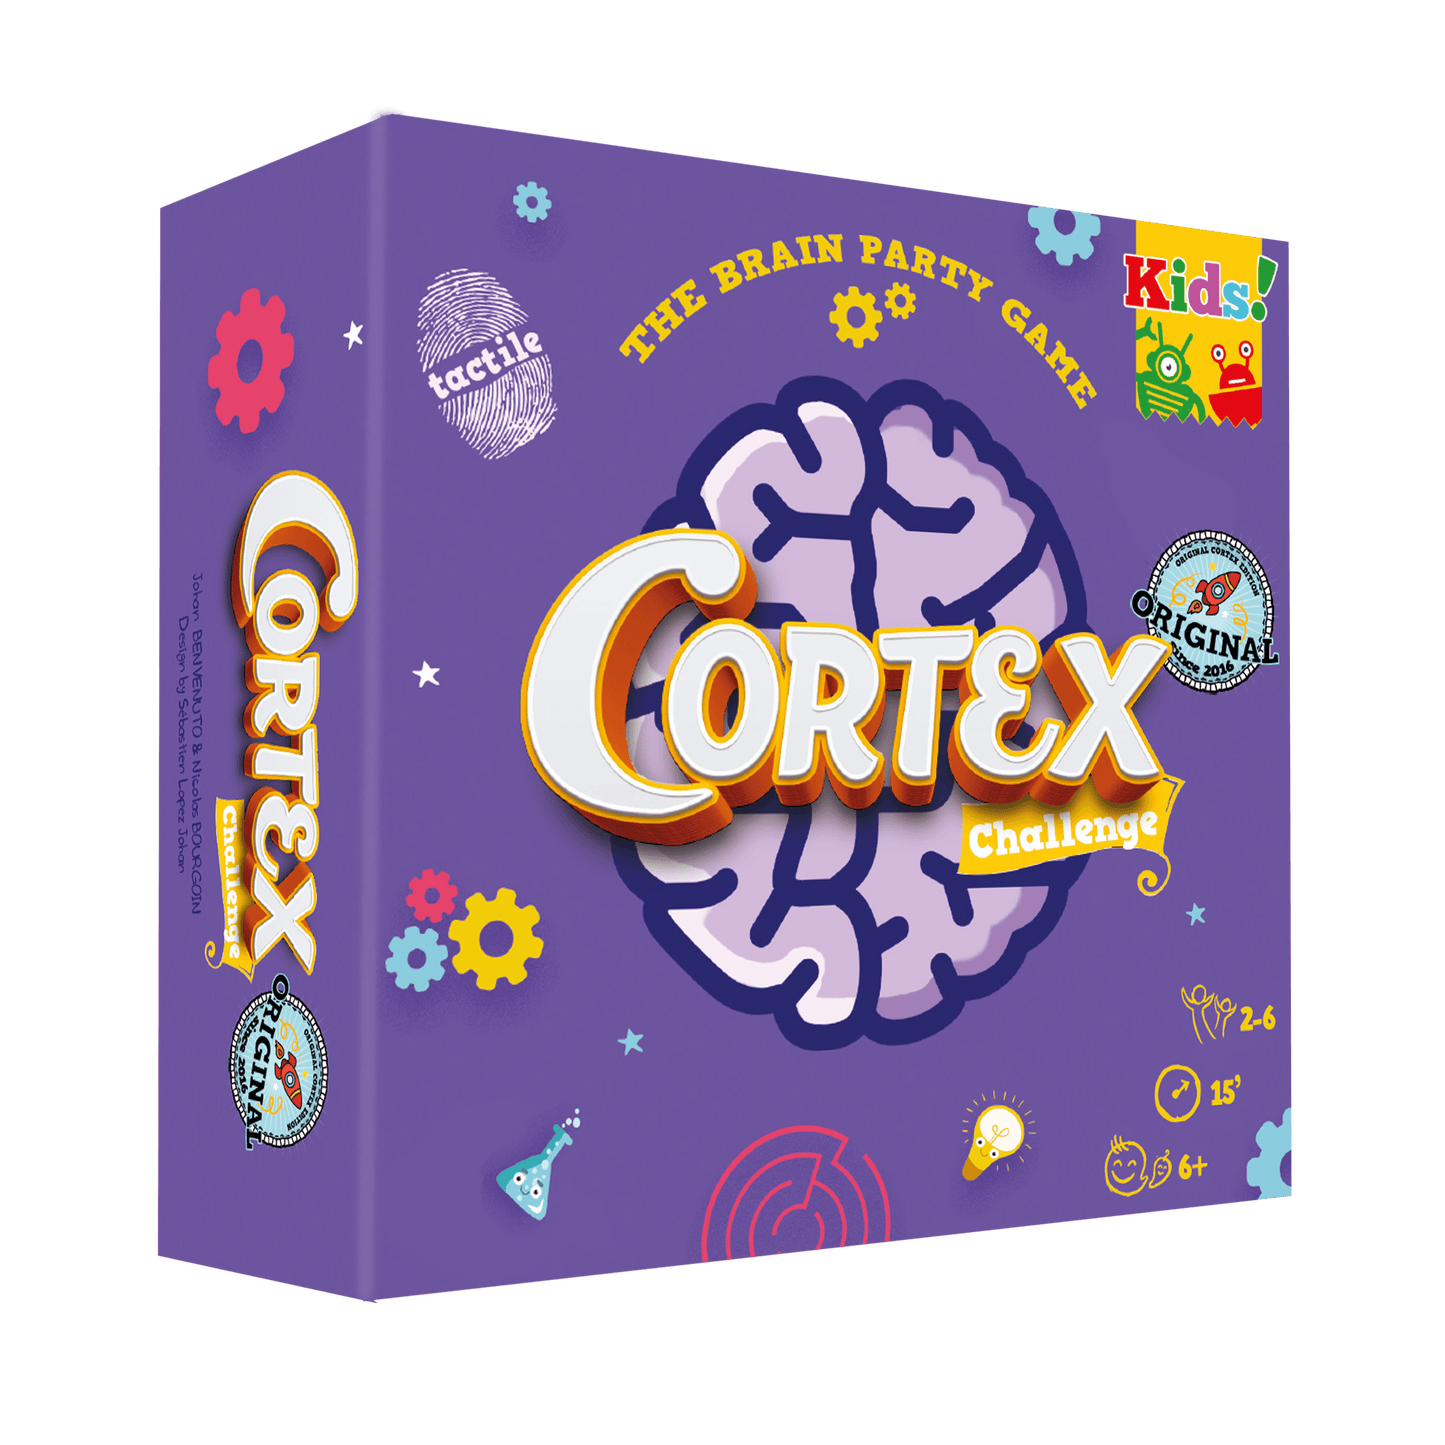 Cortex challenge - Kids